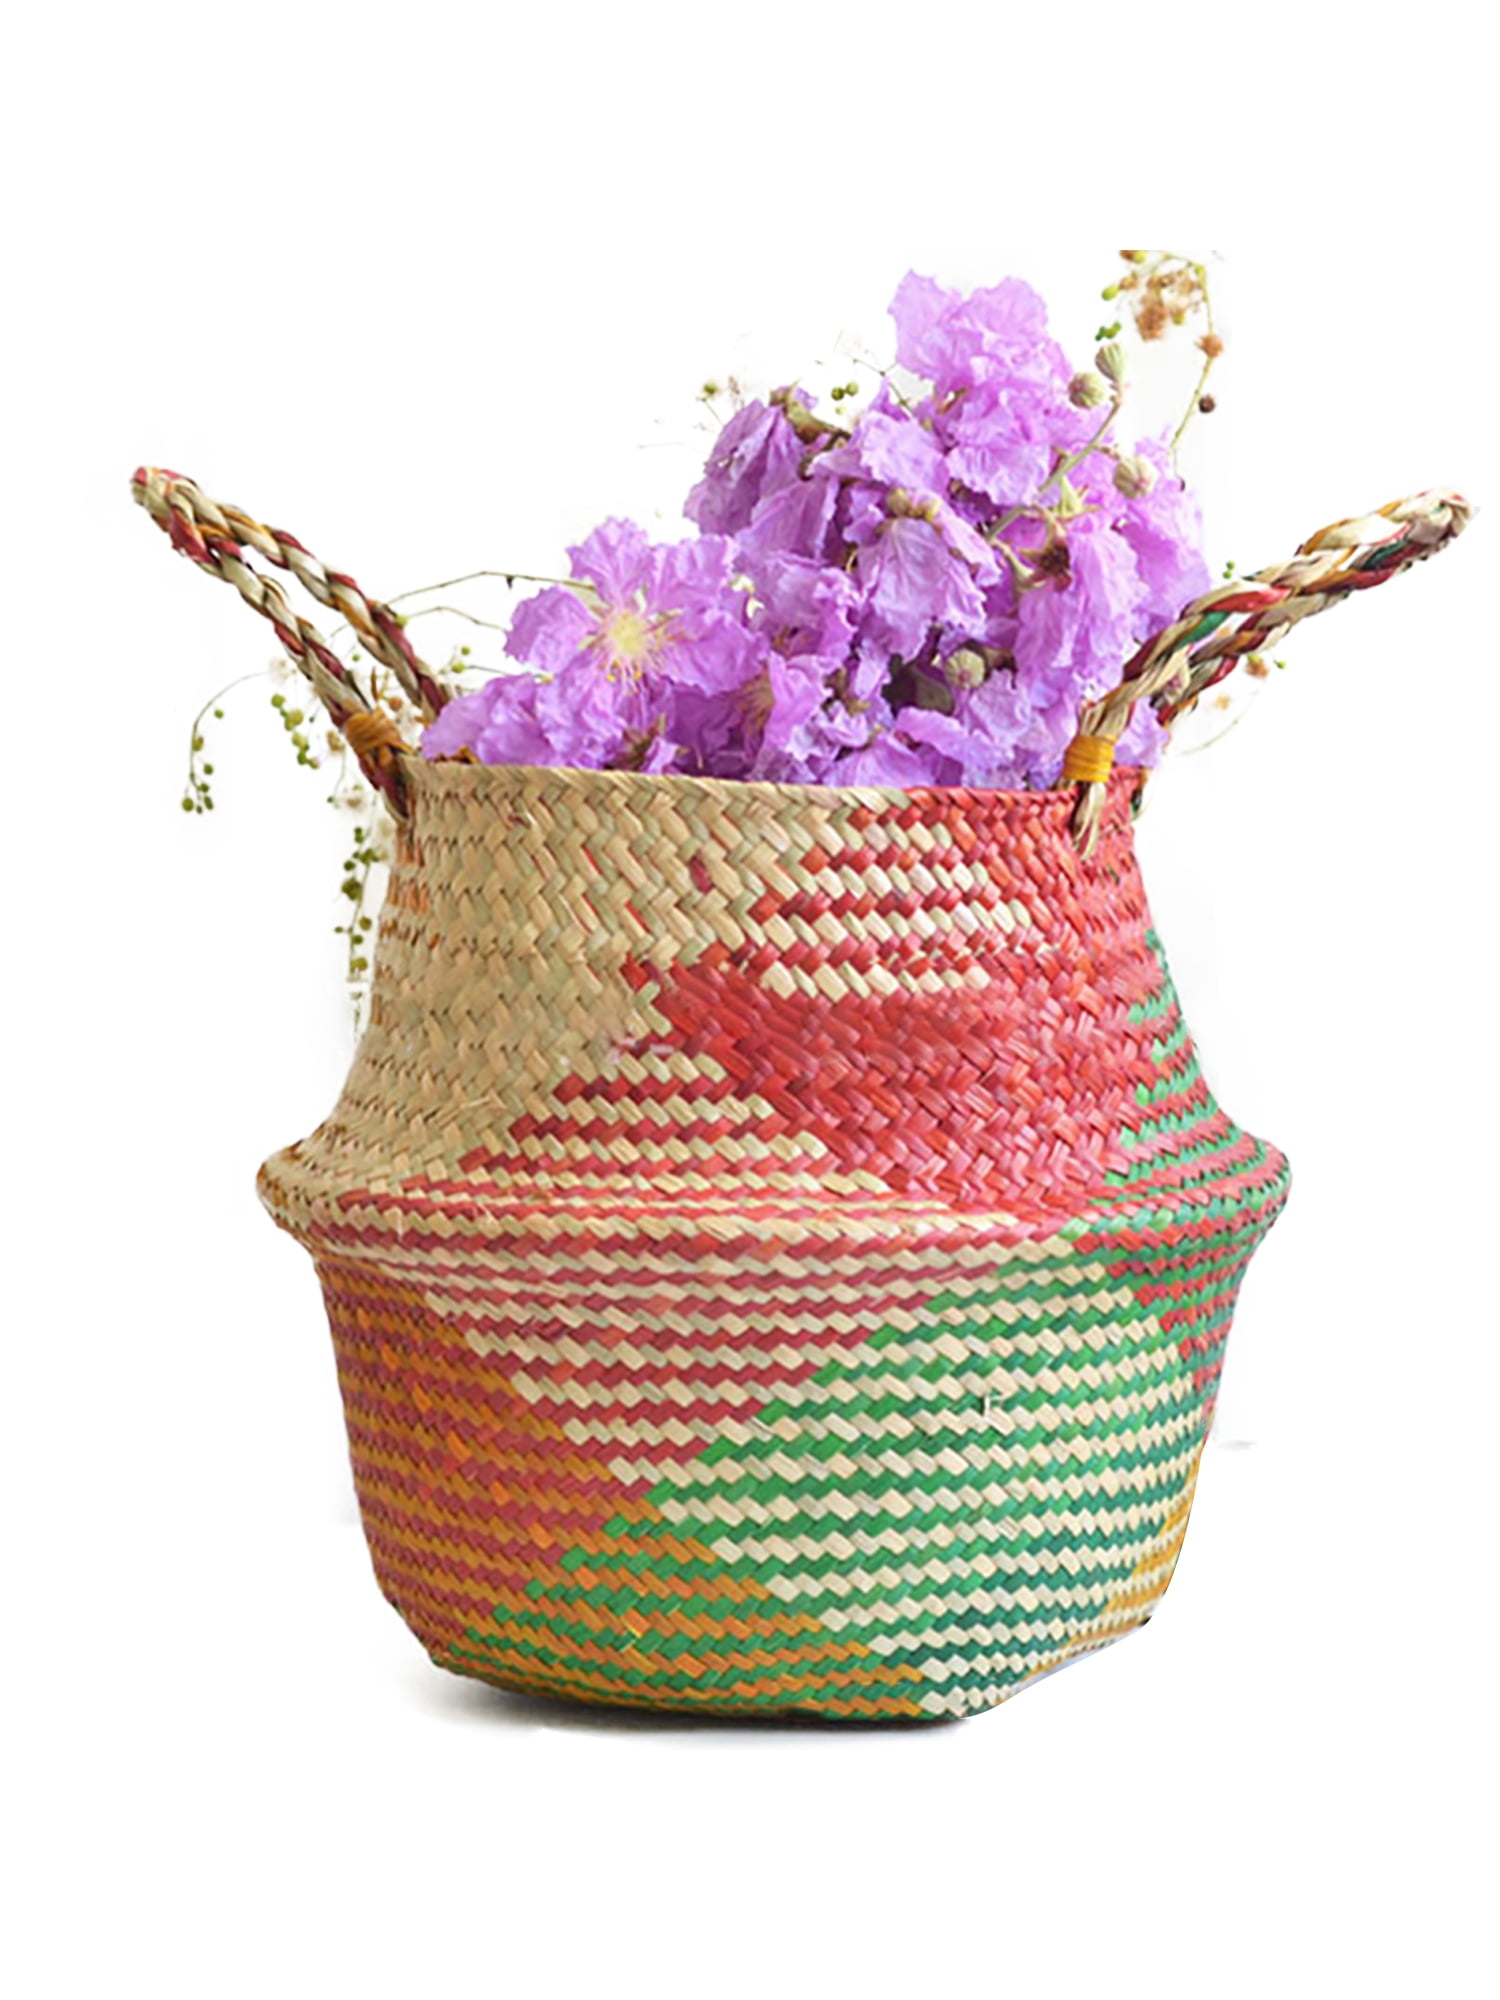 Seagrass Woven Storage Wicker Basket Flower Plants Straw Pots Bag Decor 1/3Pcs 